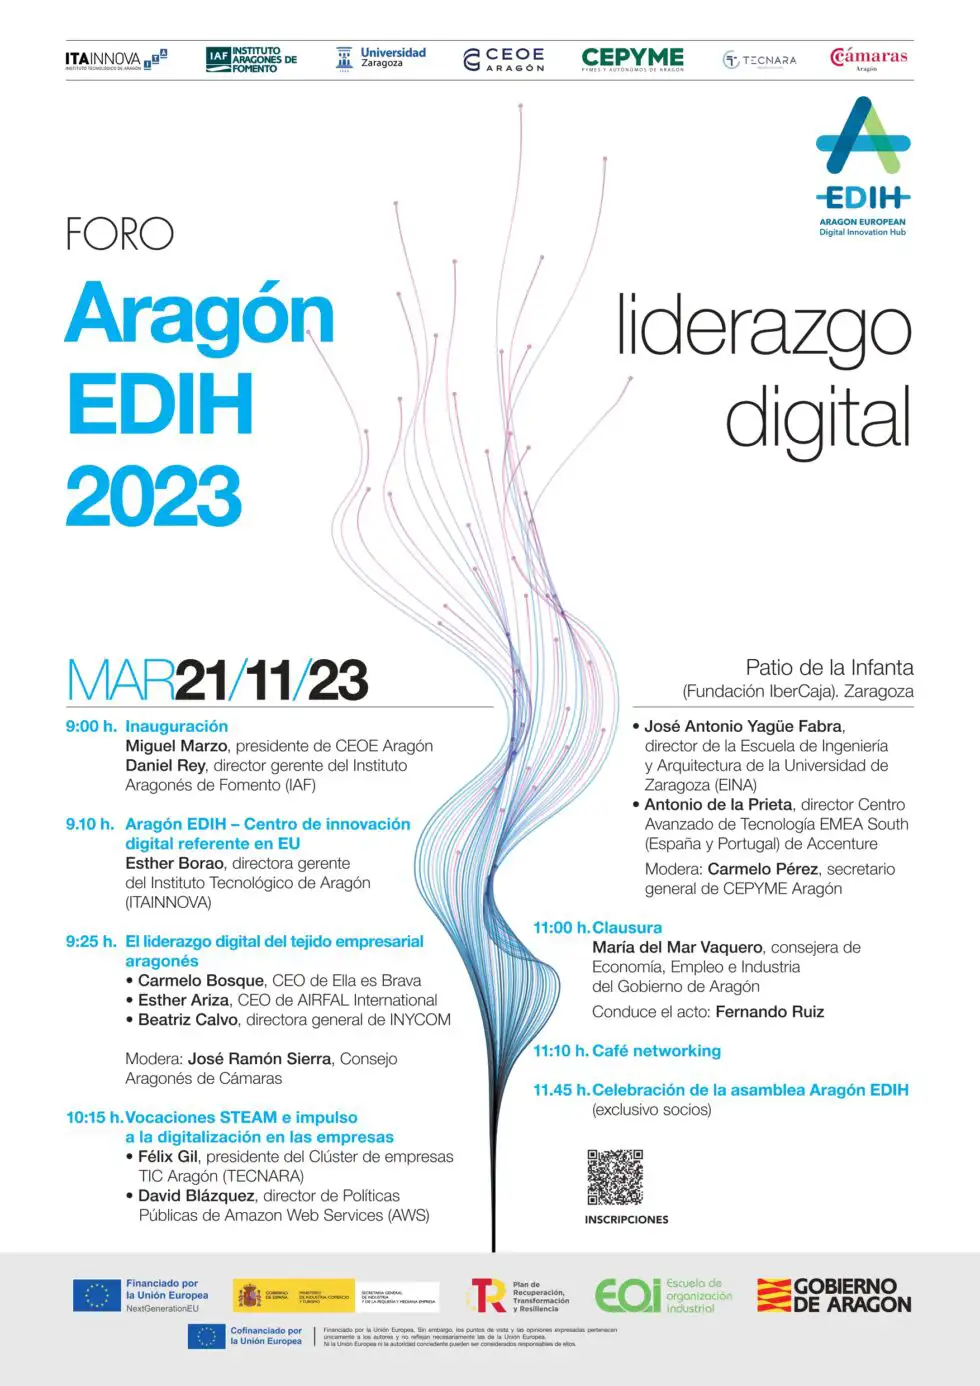 Foro Aragón EDIH 2023